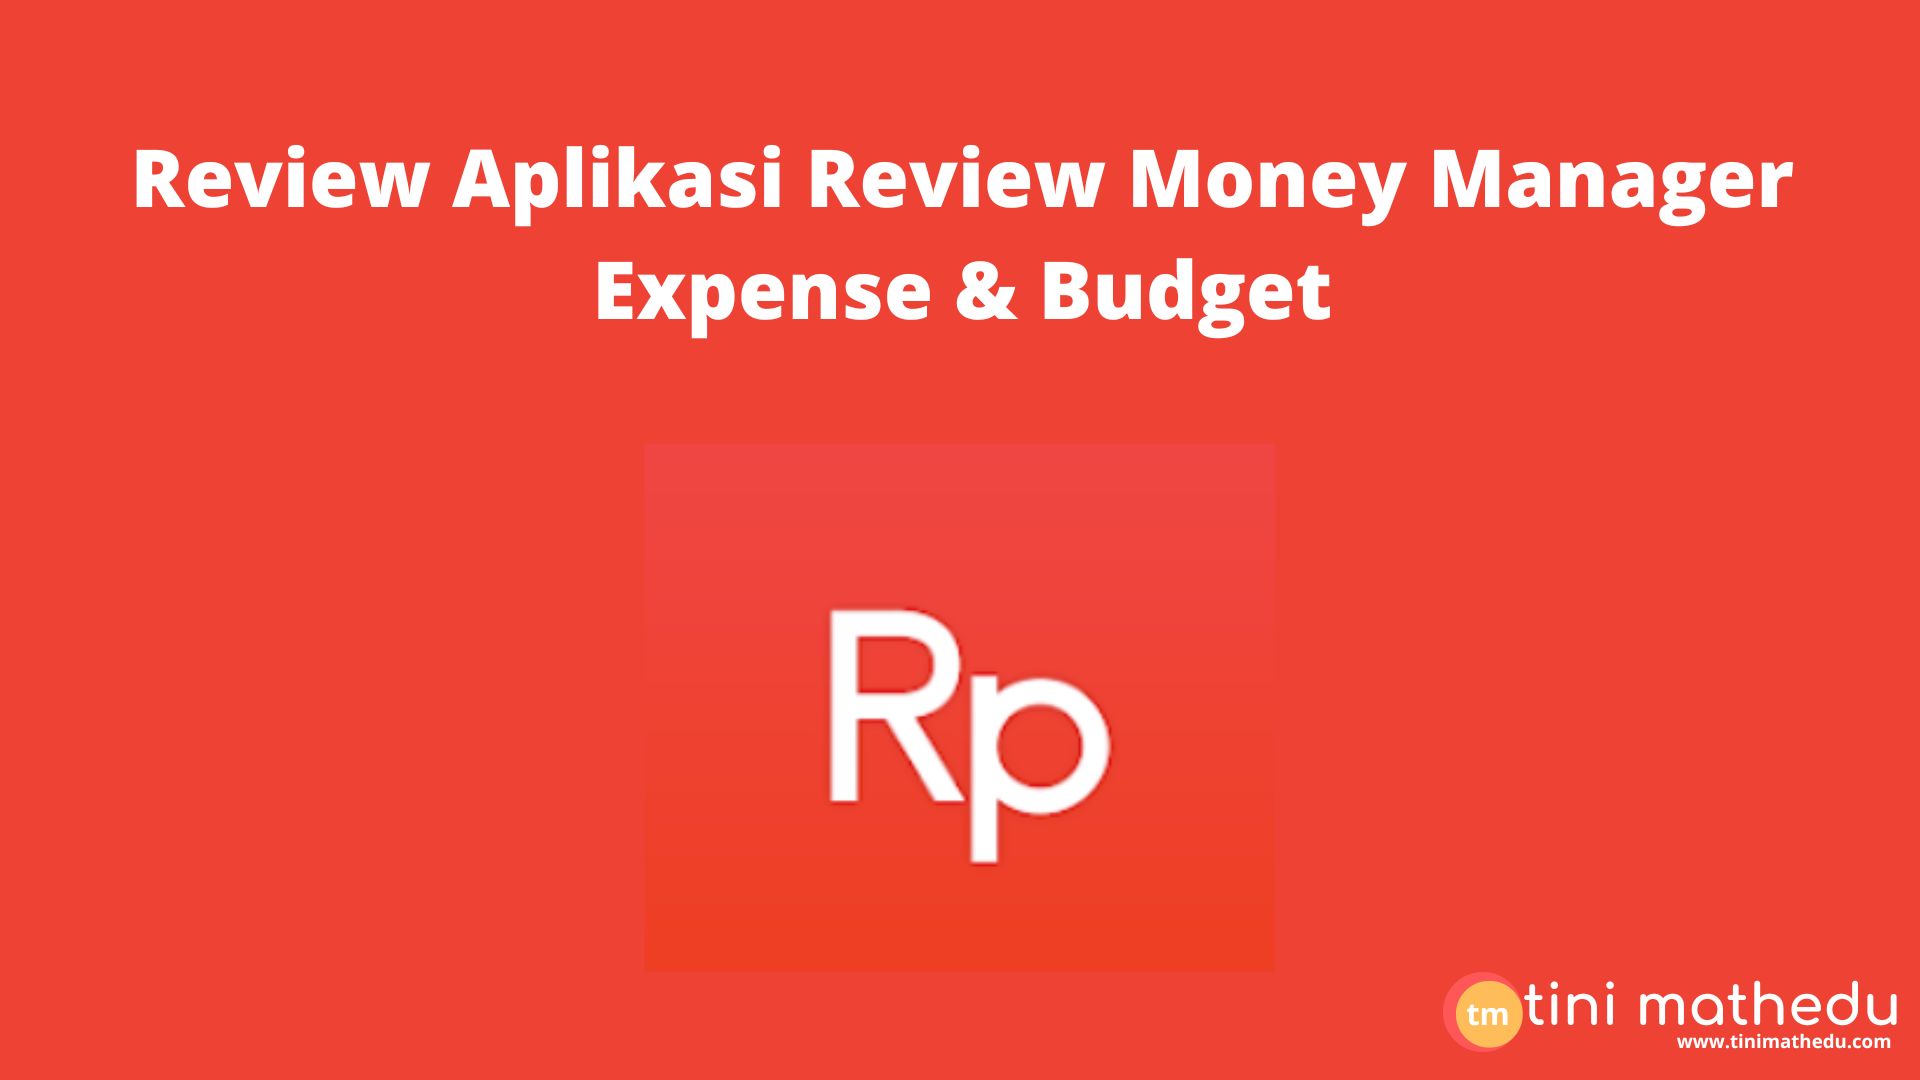 Review Money Manager Expense & Budget, Aplikasi Pencatat Keuangan Digital